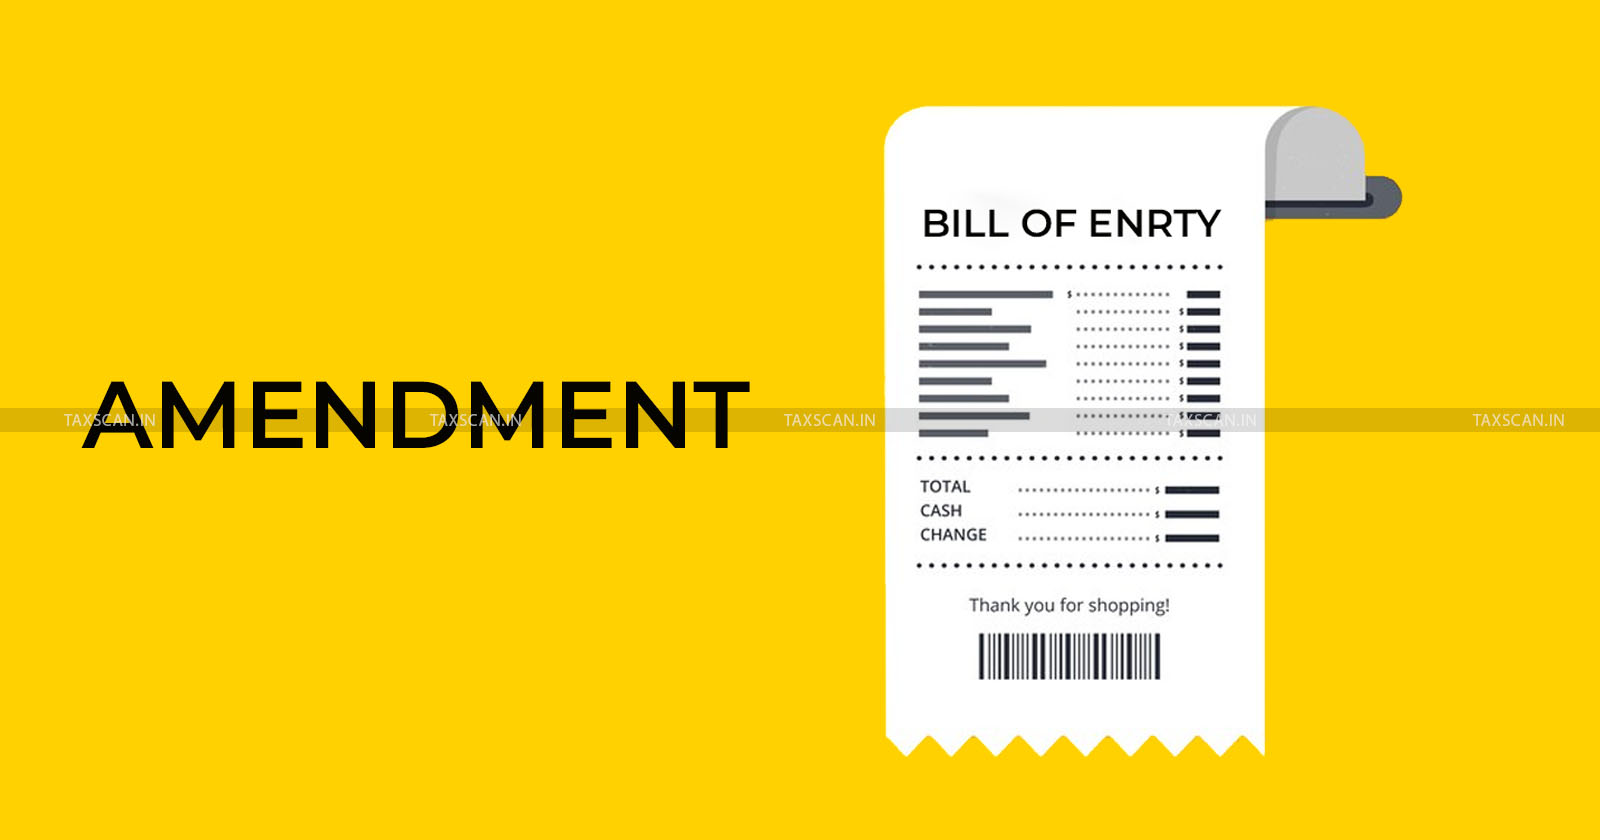 Customs Dept - Issues Procedure - Filing and Processing Bill of Entry Amendment - Requests - TAXSCAN